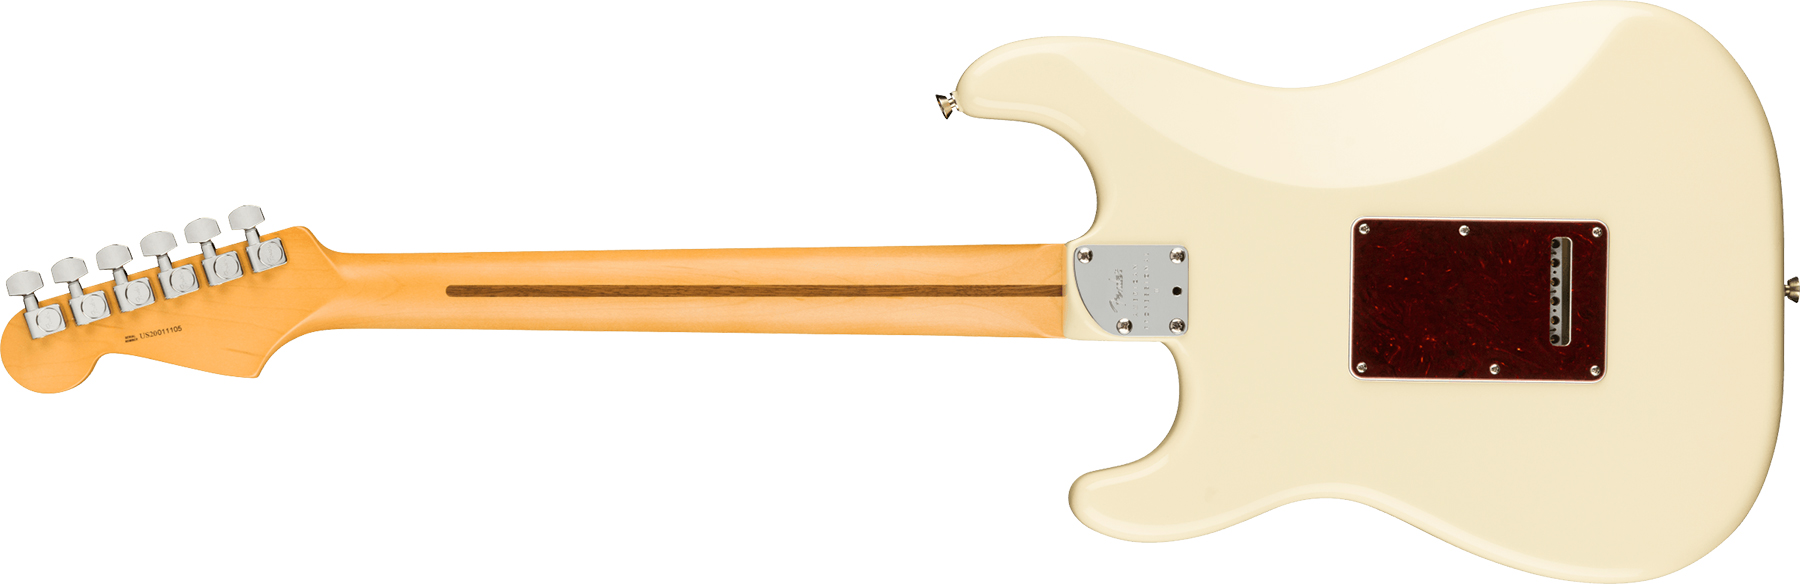 Fender Strat American Professional Ii Hss Usa Rw - Olympic White - Str shape electric guitar - Variation 1